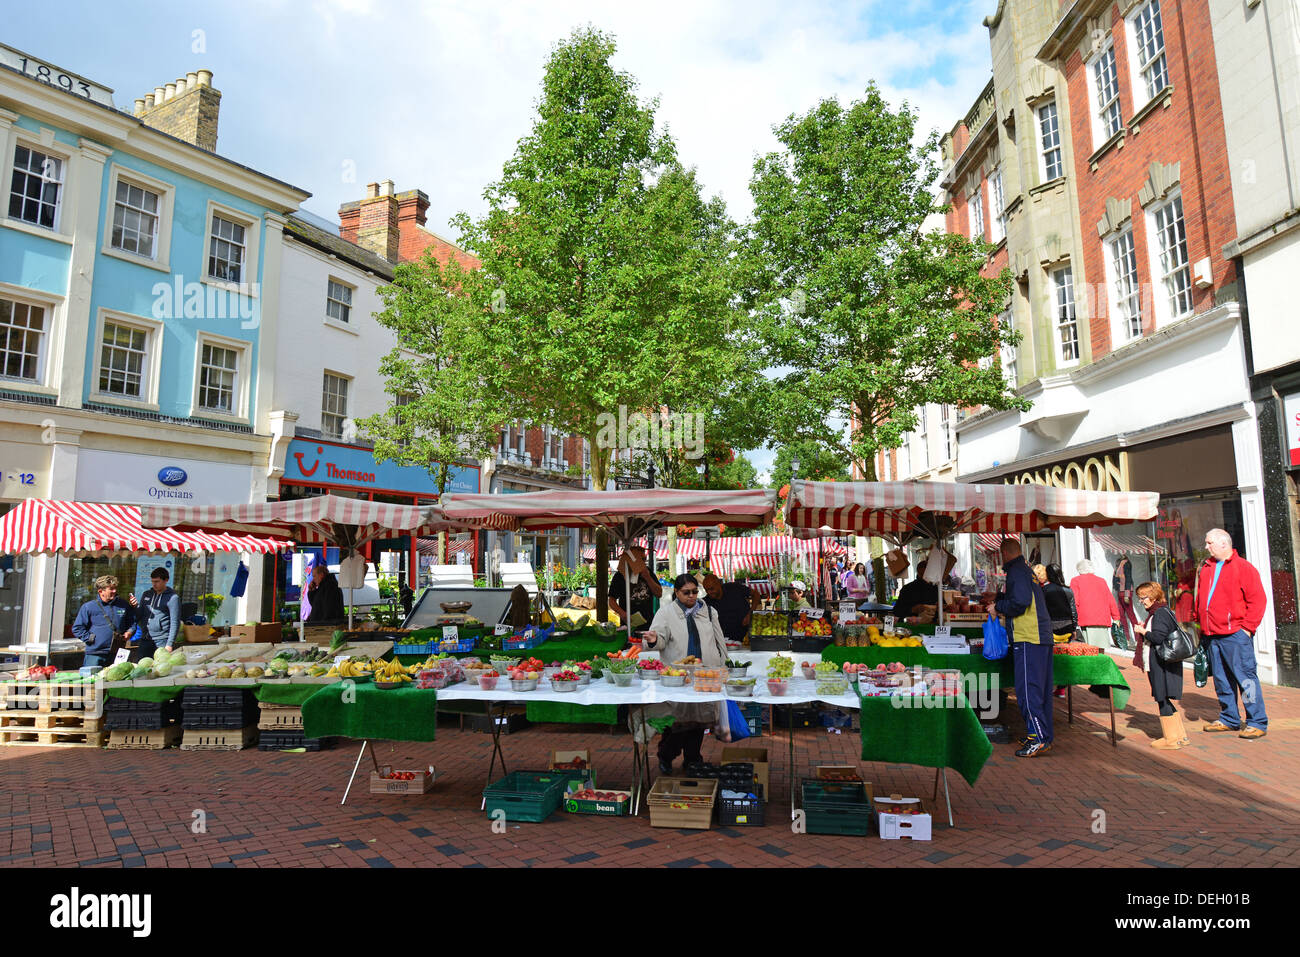 Saturday Market, Market Place, Rugby, Warwickshire, England, United Kingdom  Stock Photo - Alamy